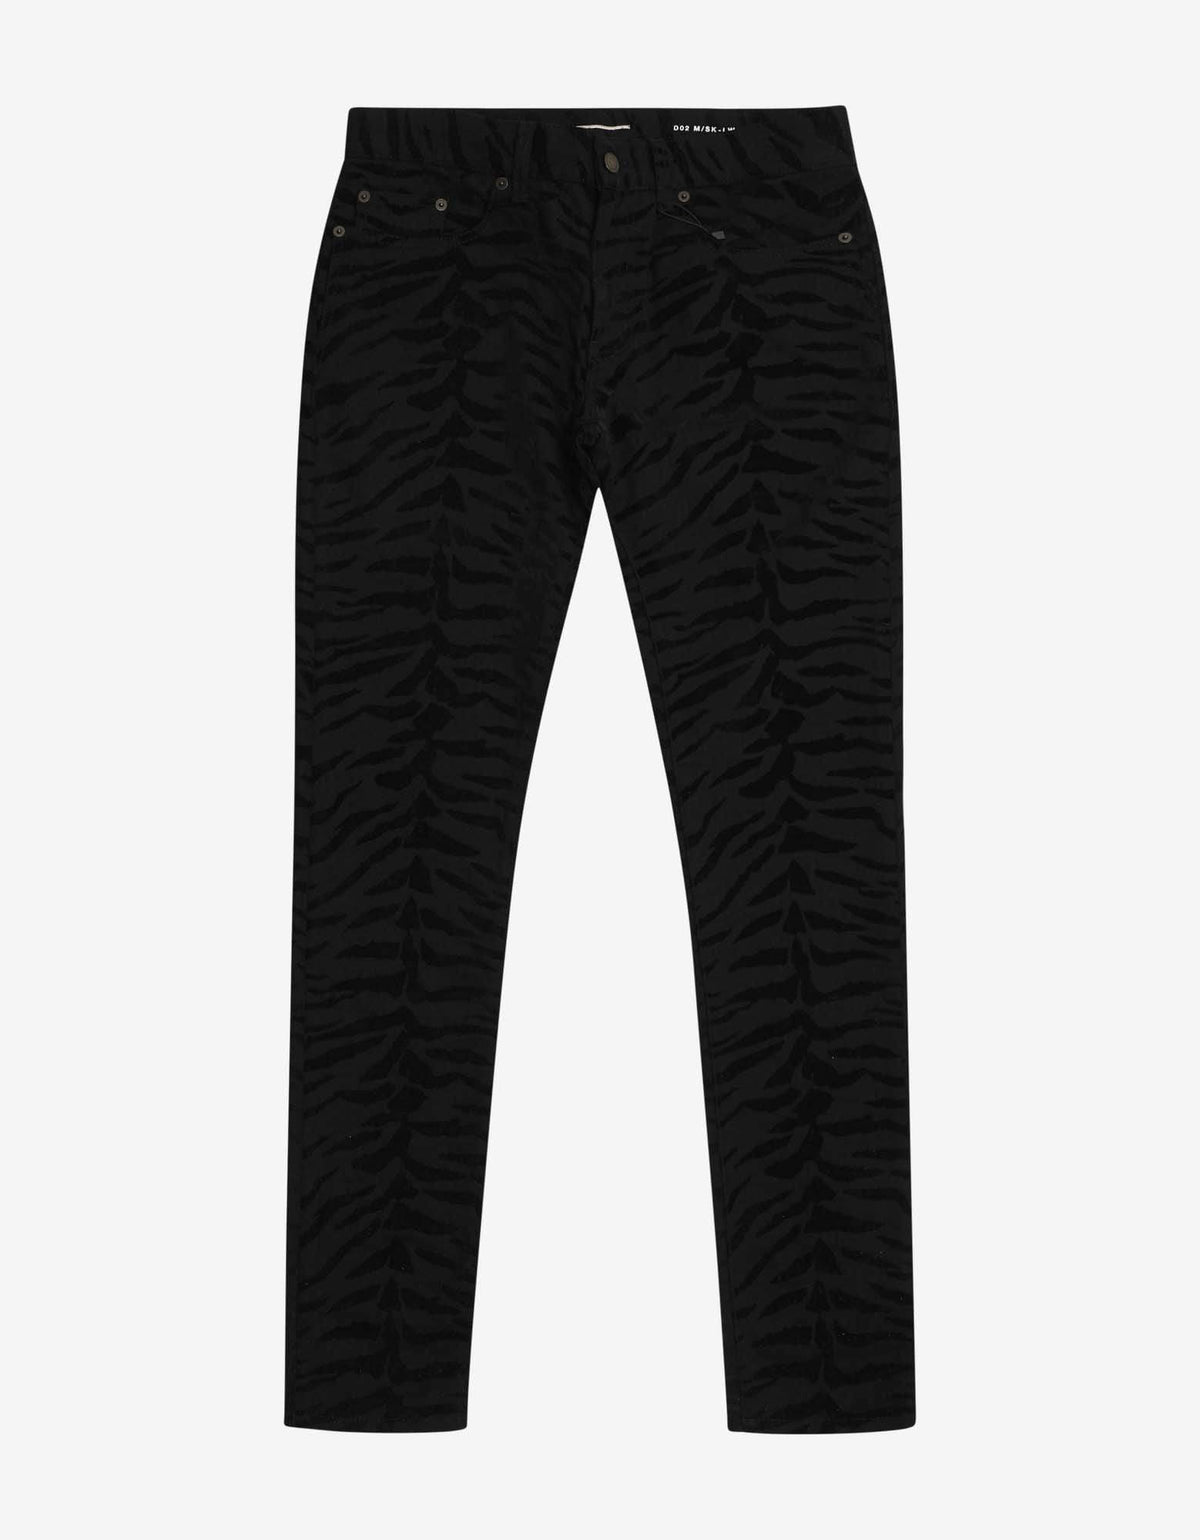 Saint Laurent Black Zebra Print Skinny Jeans